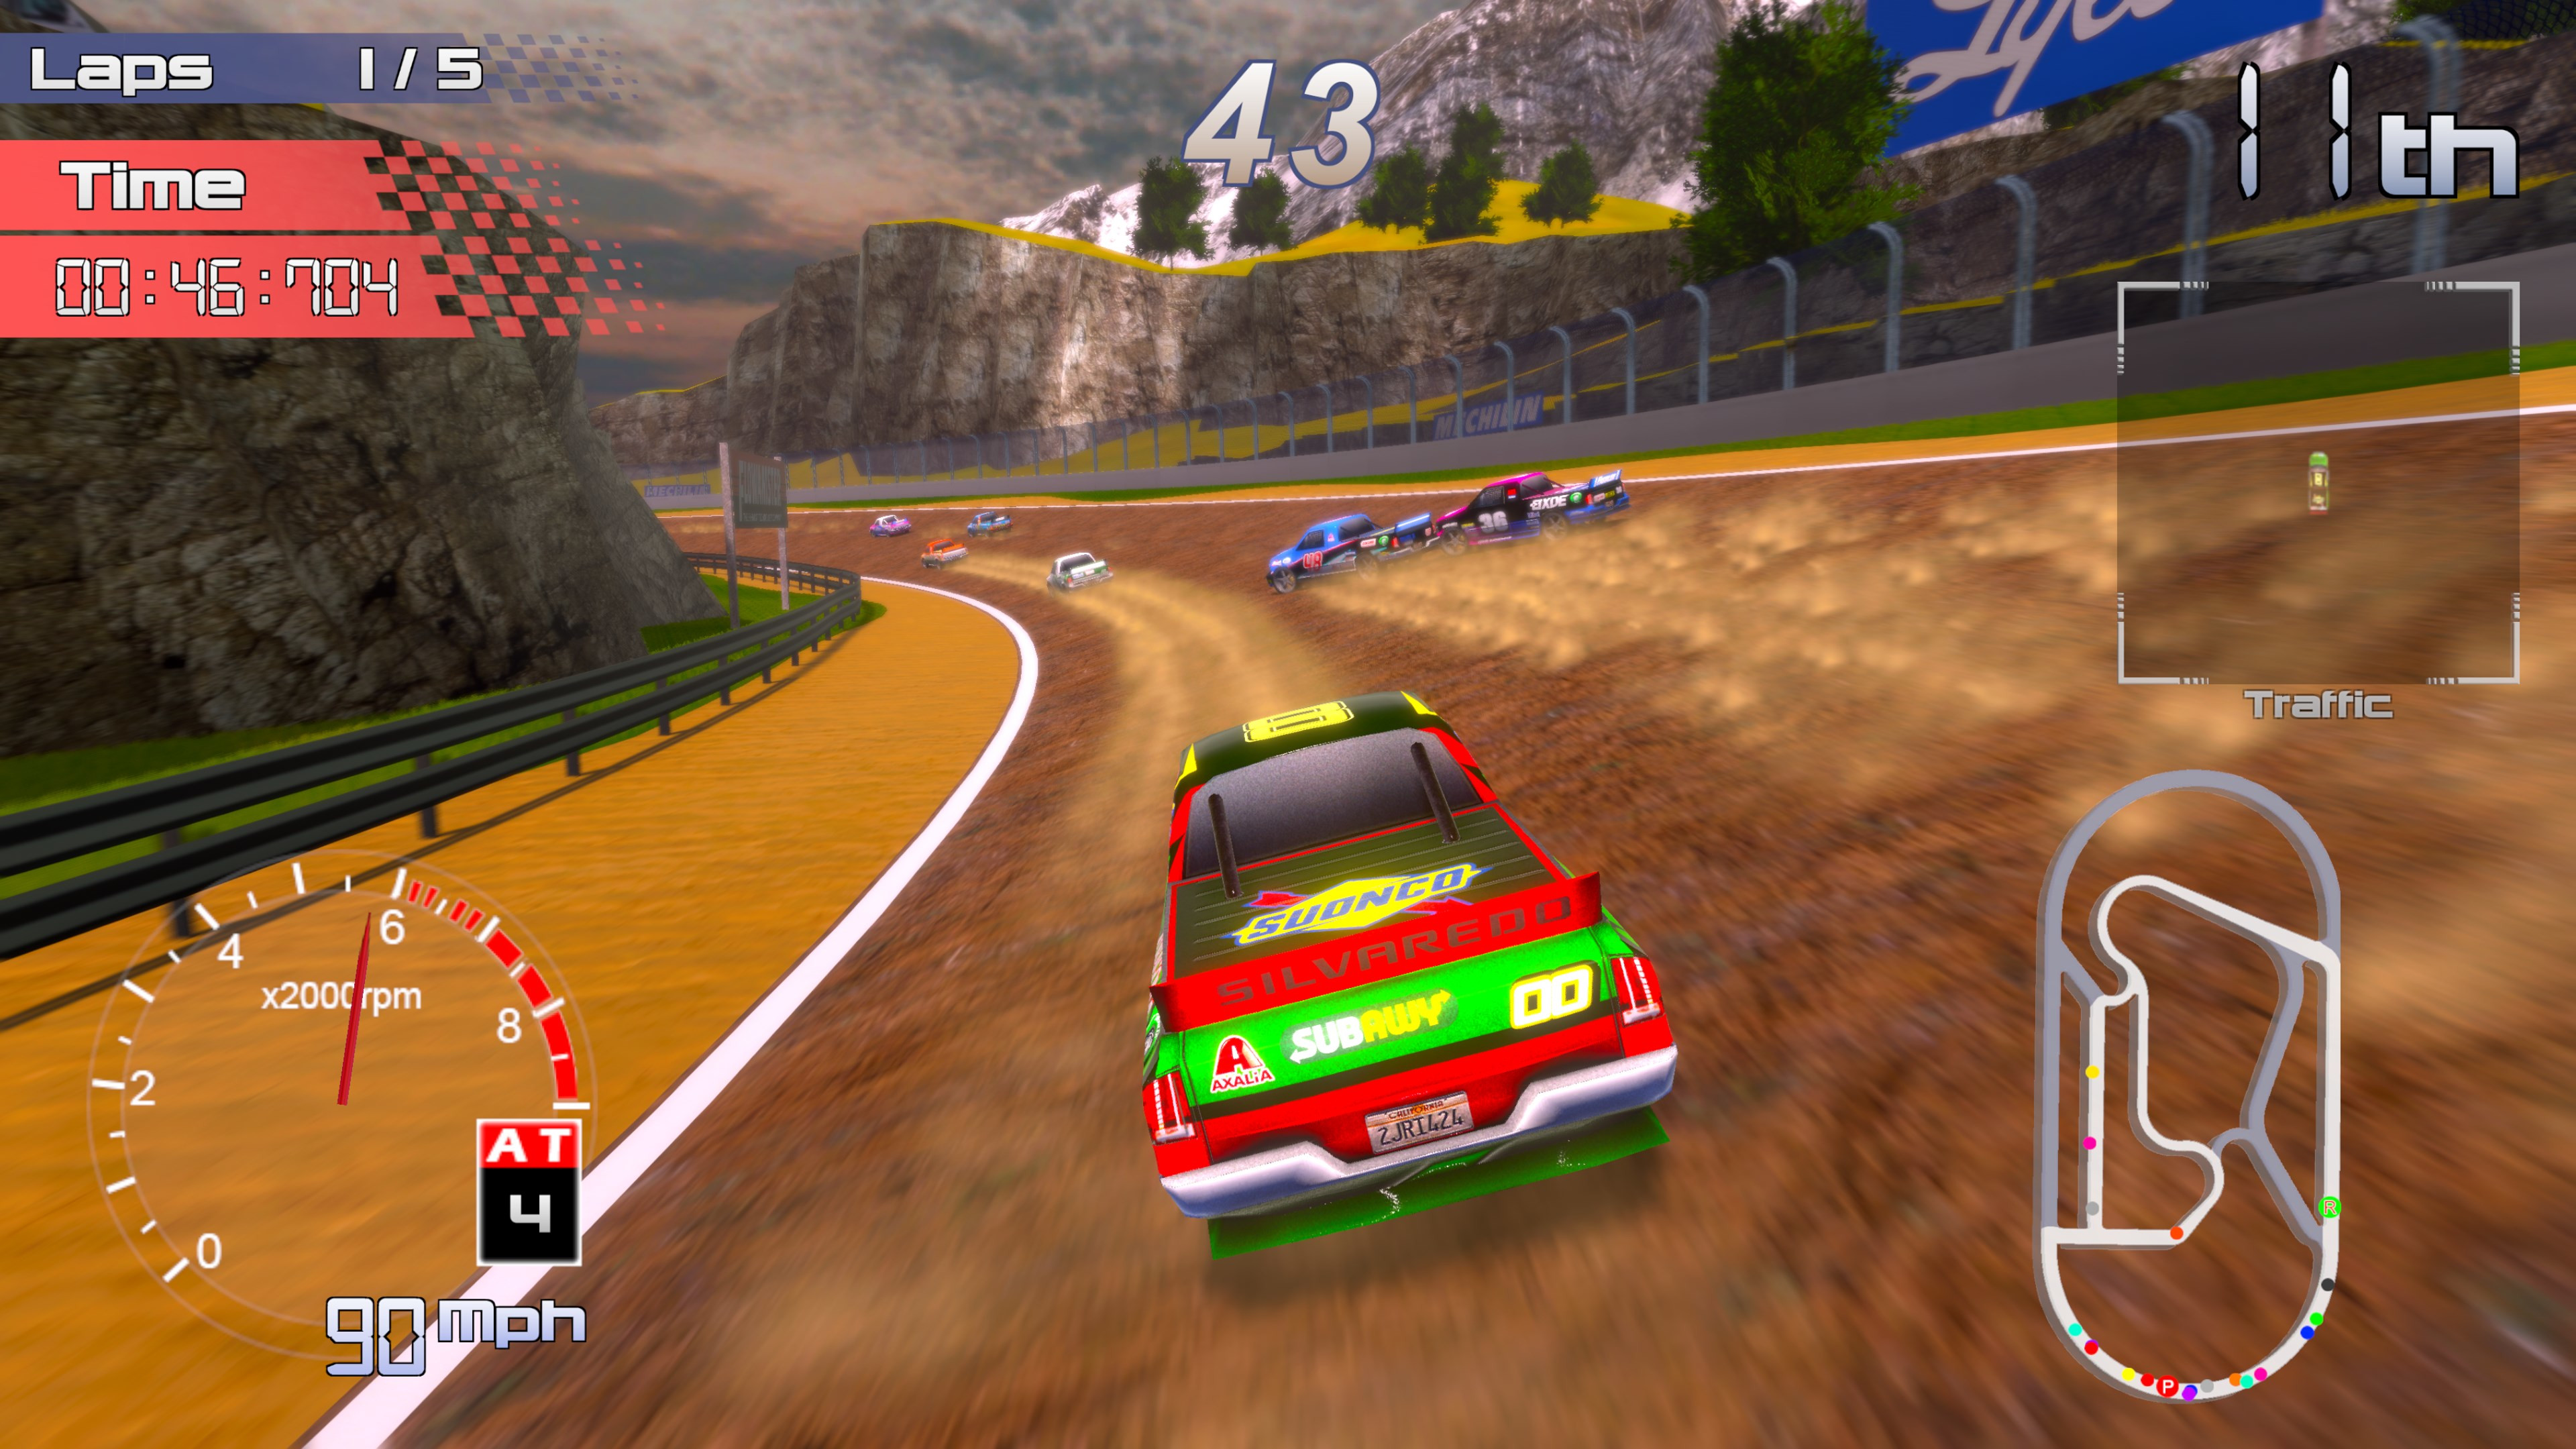 Speed Truck Racing AR XBOX One / Xbox Series X,S CD Key